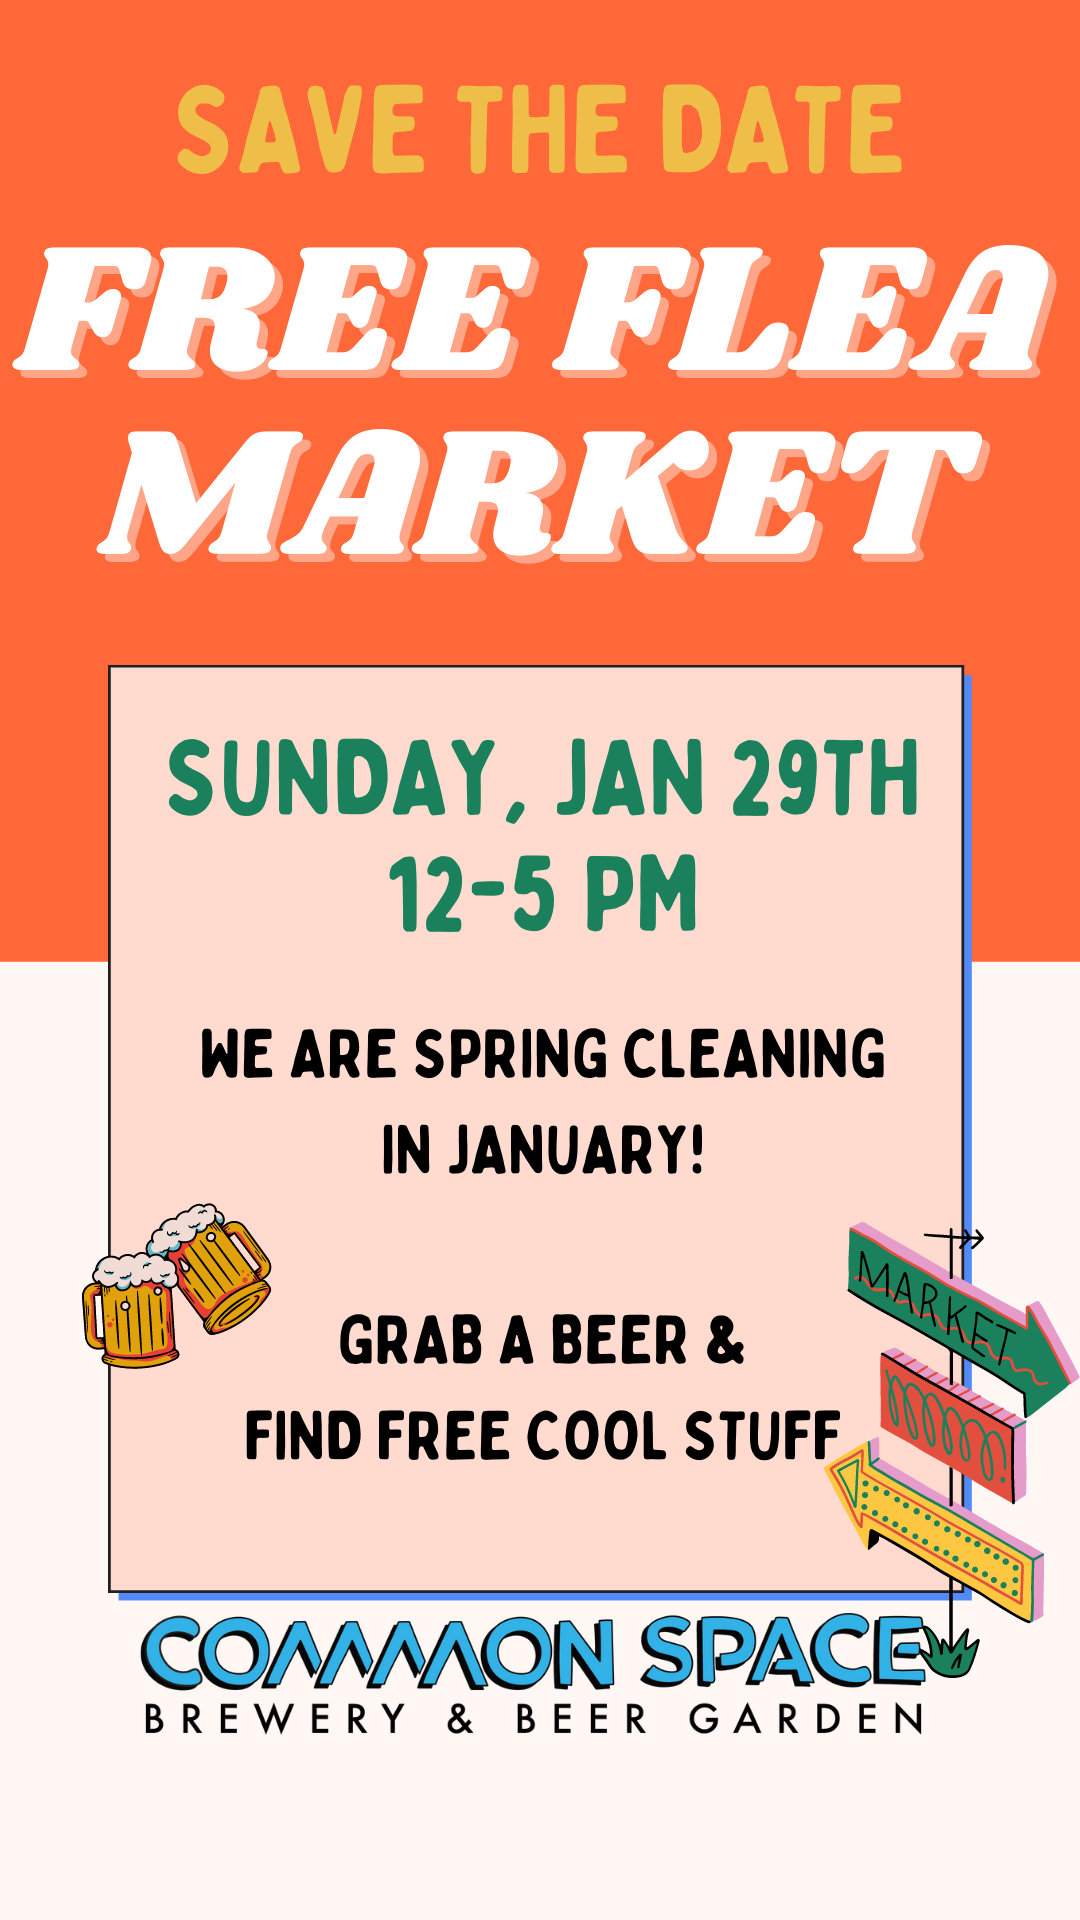 Free Flea Market!